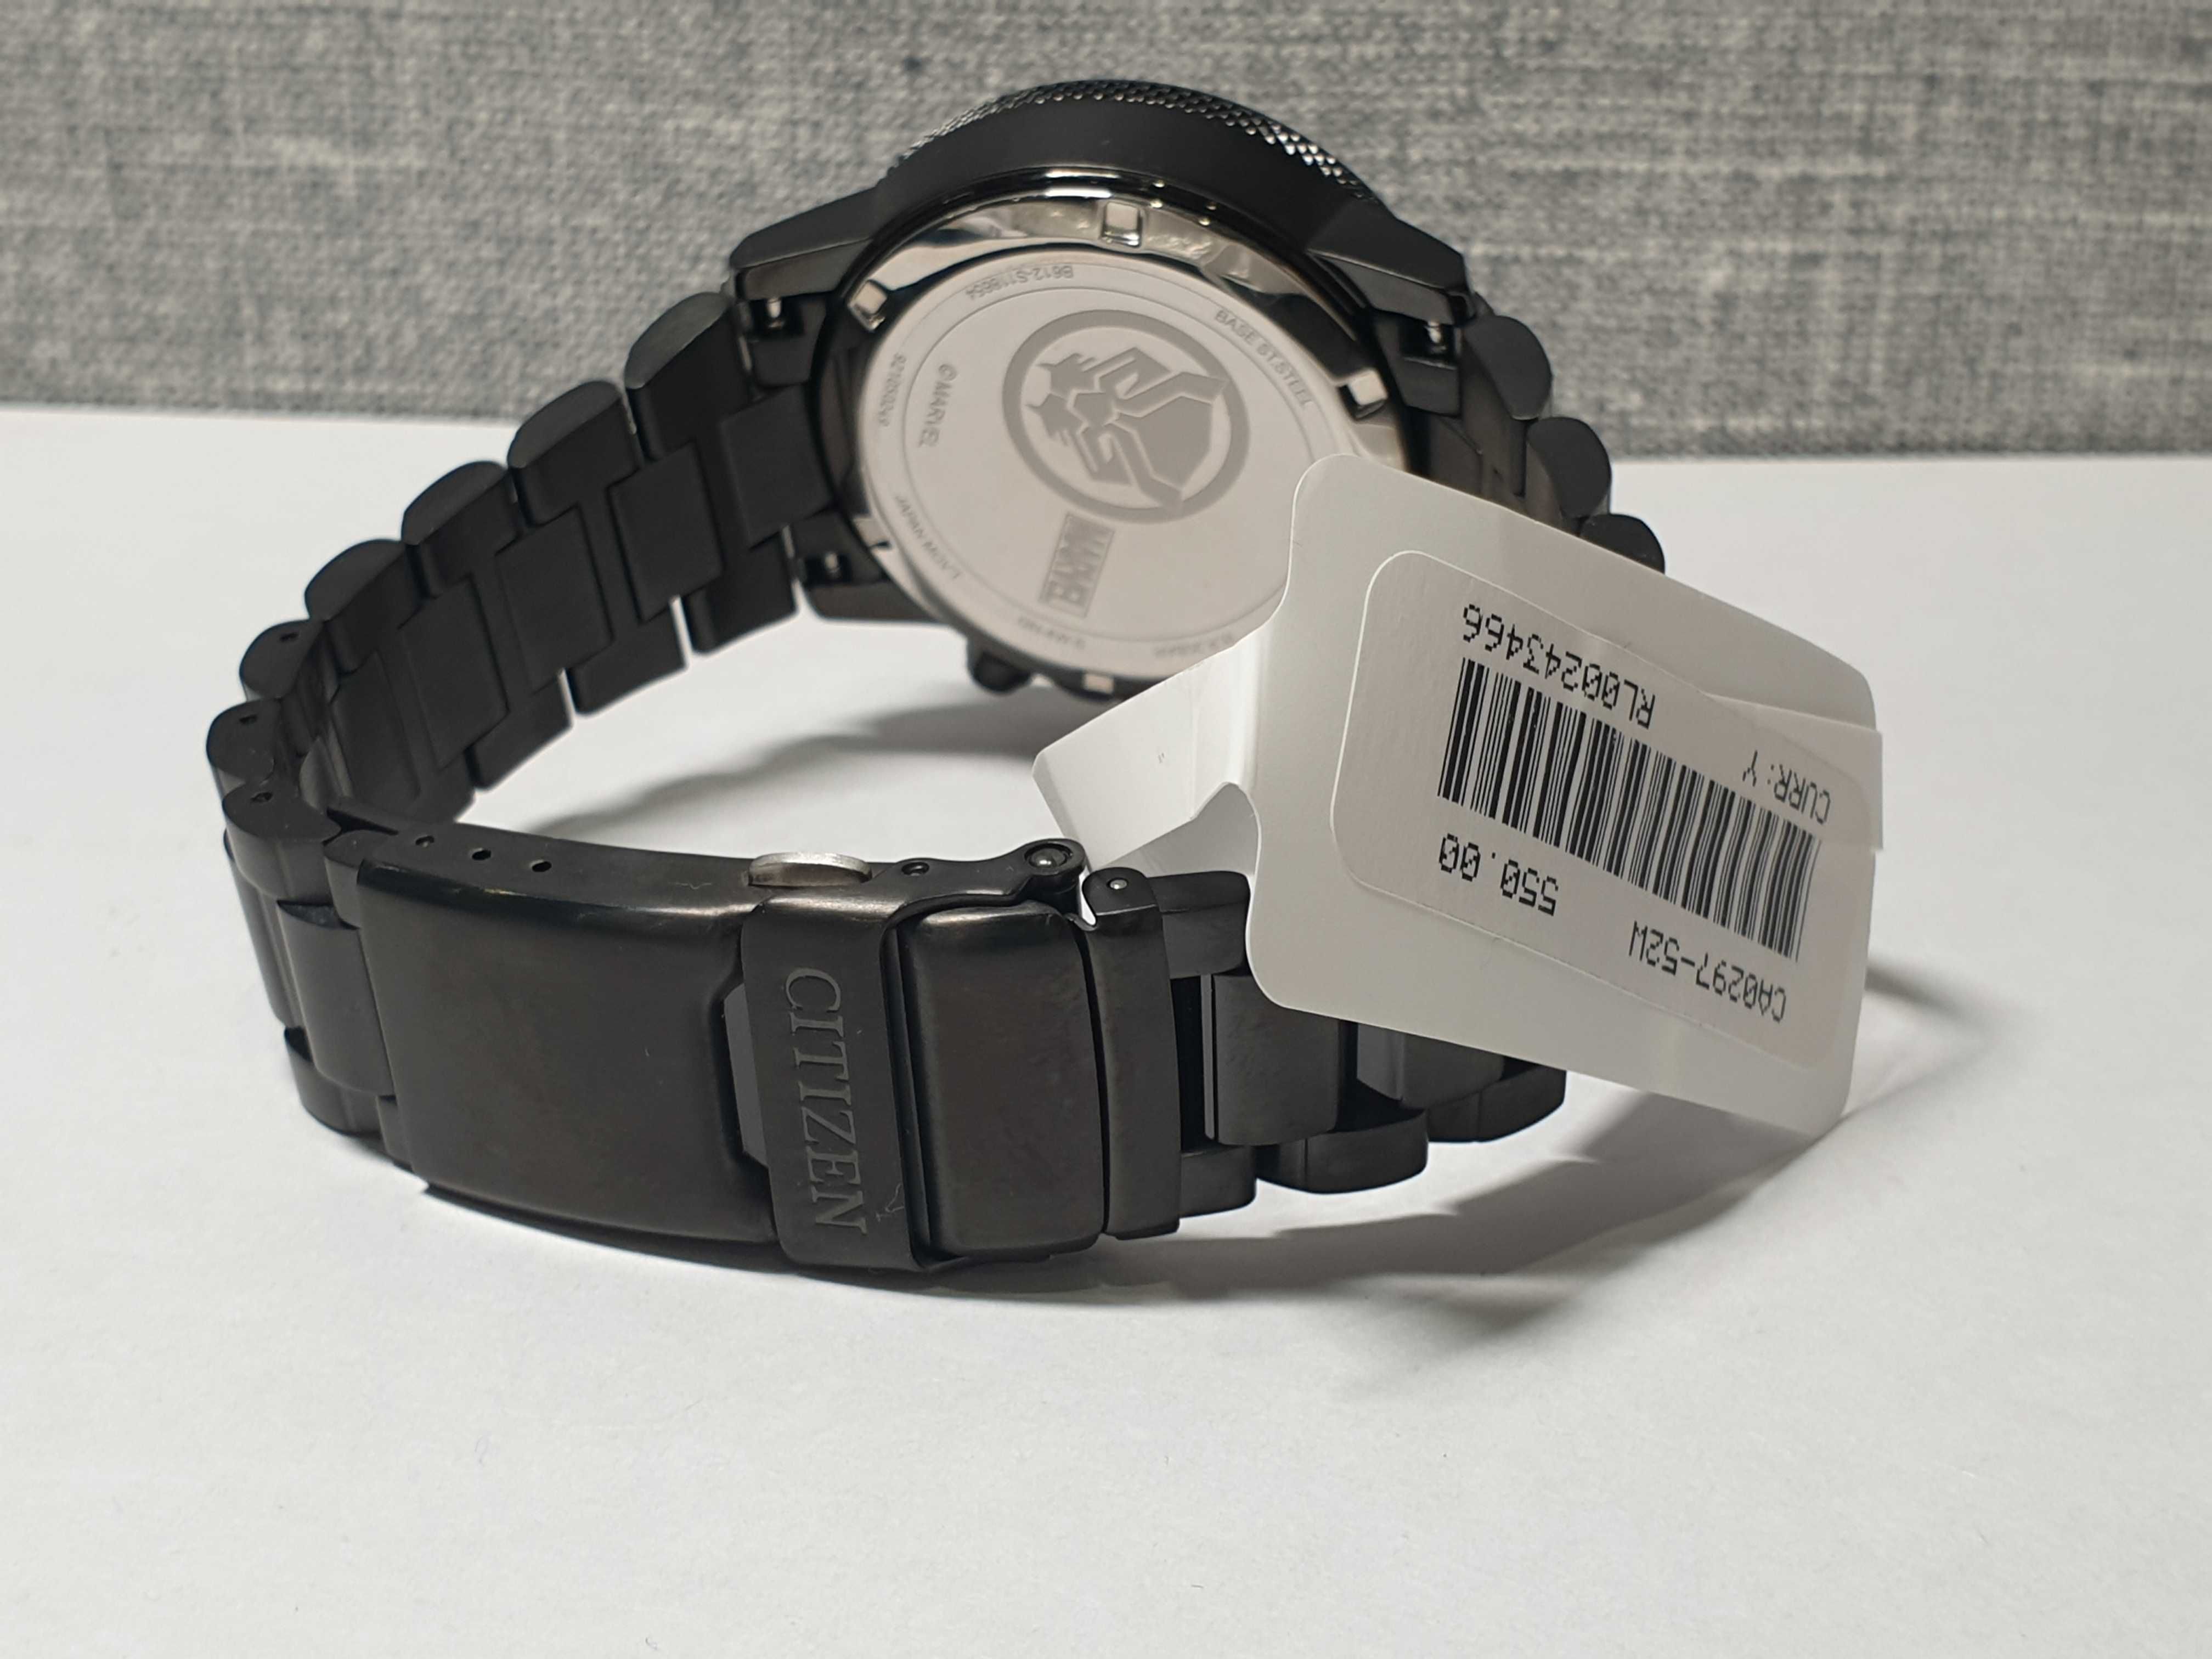 Чоловічий годинник часы Citizen Eco-Drive  200m Chronograph Black